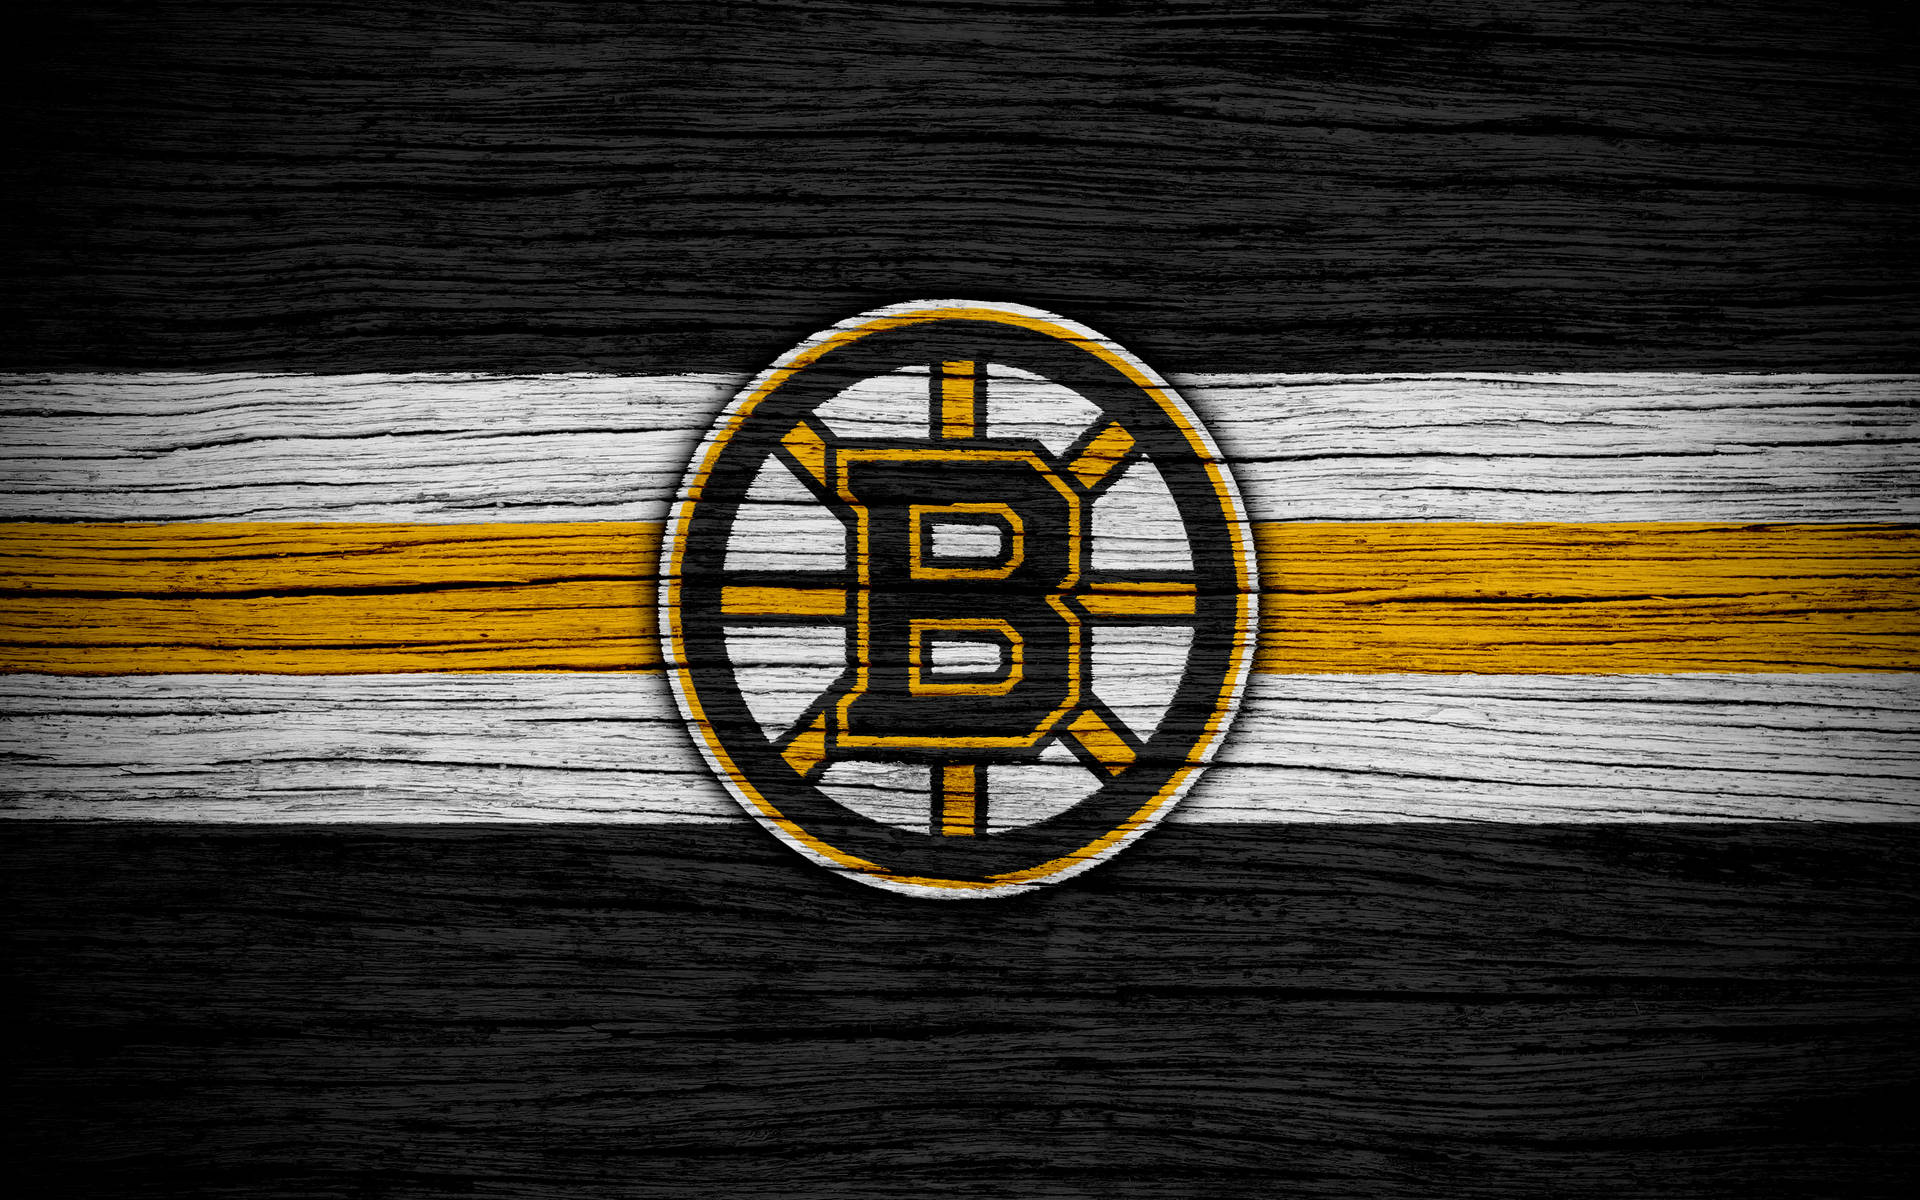 Boston Bruins Wood Grain Background